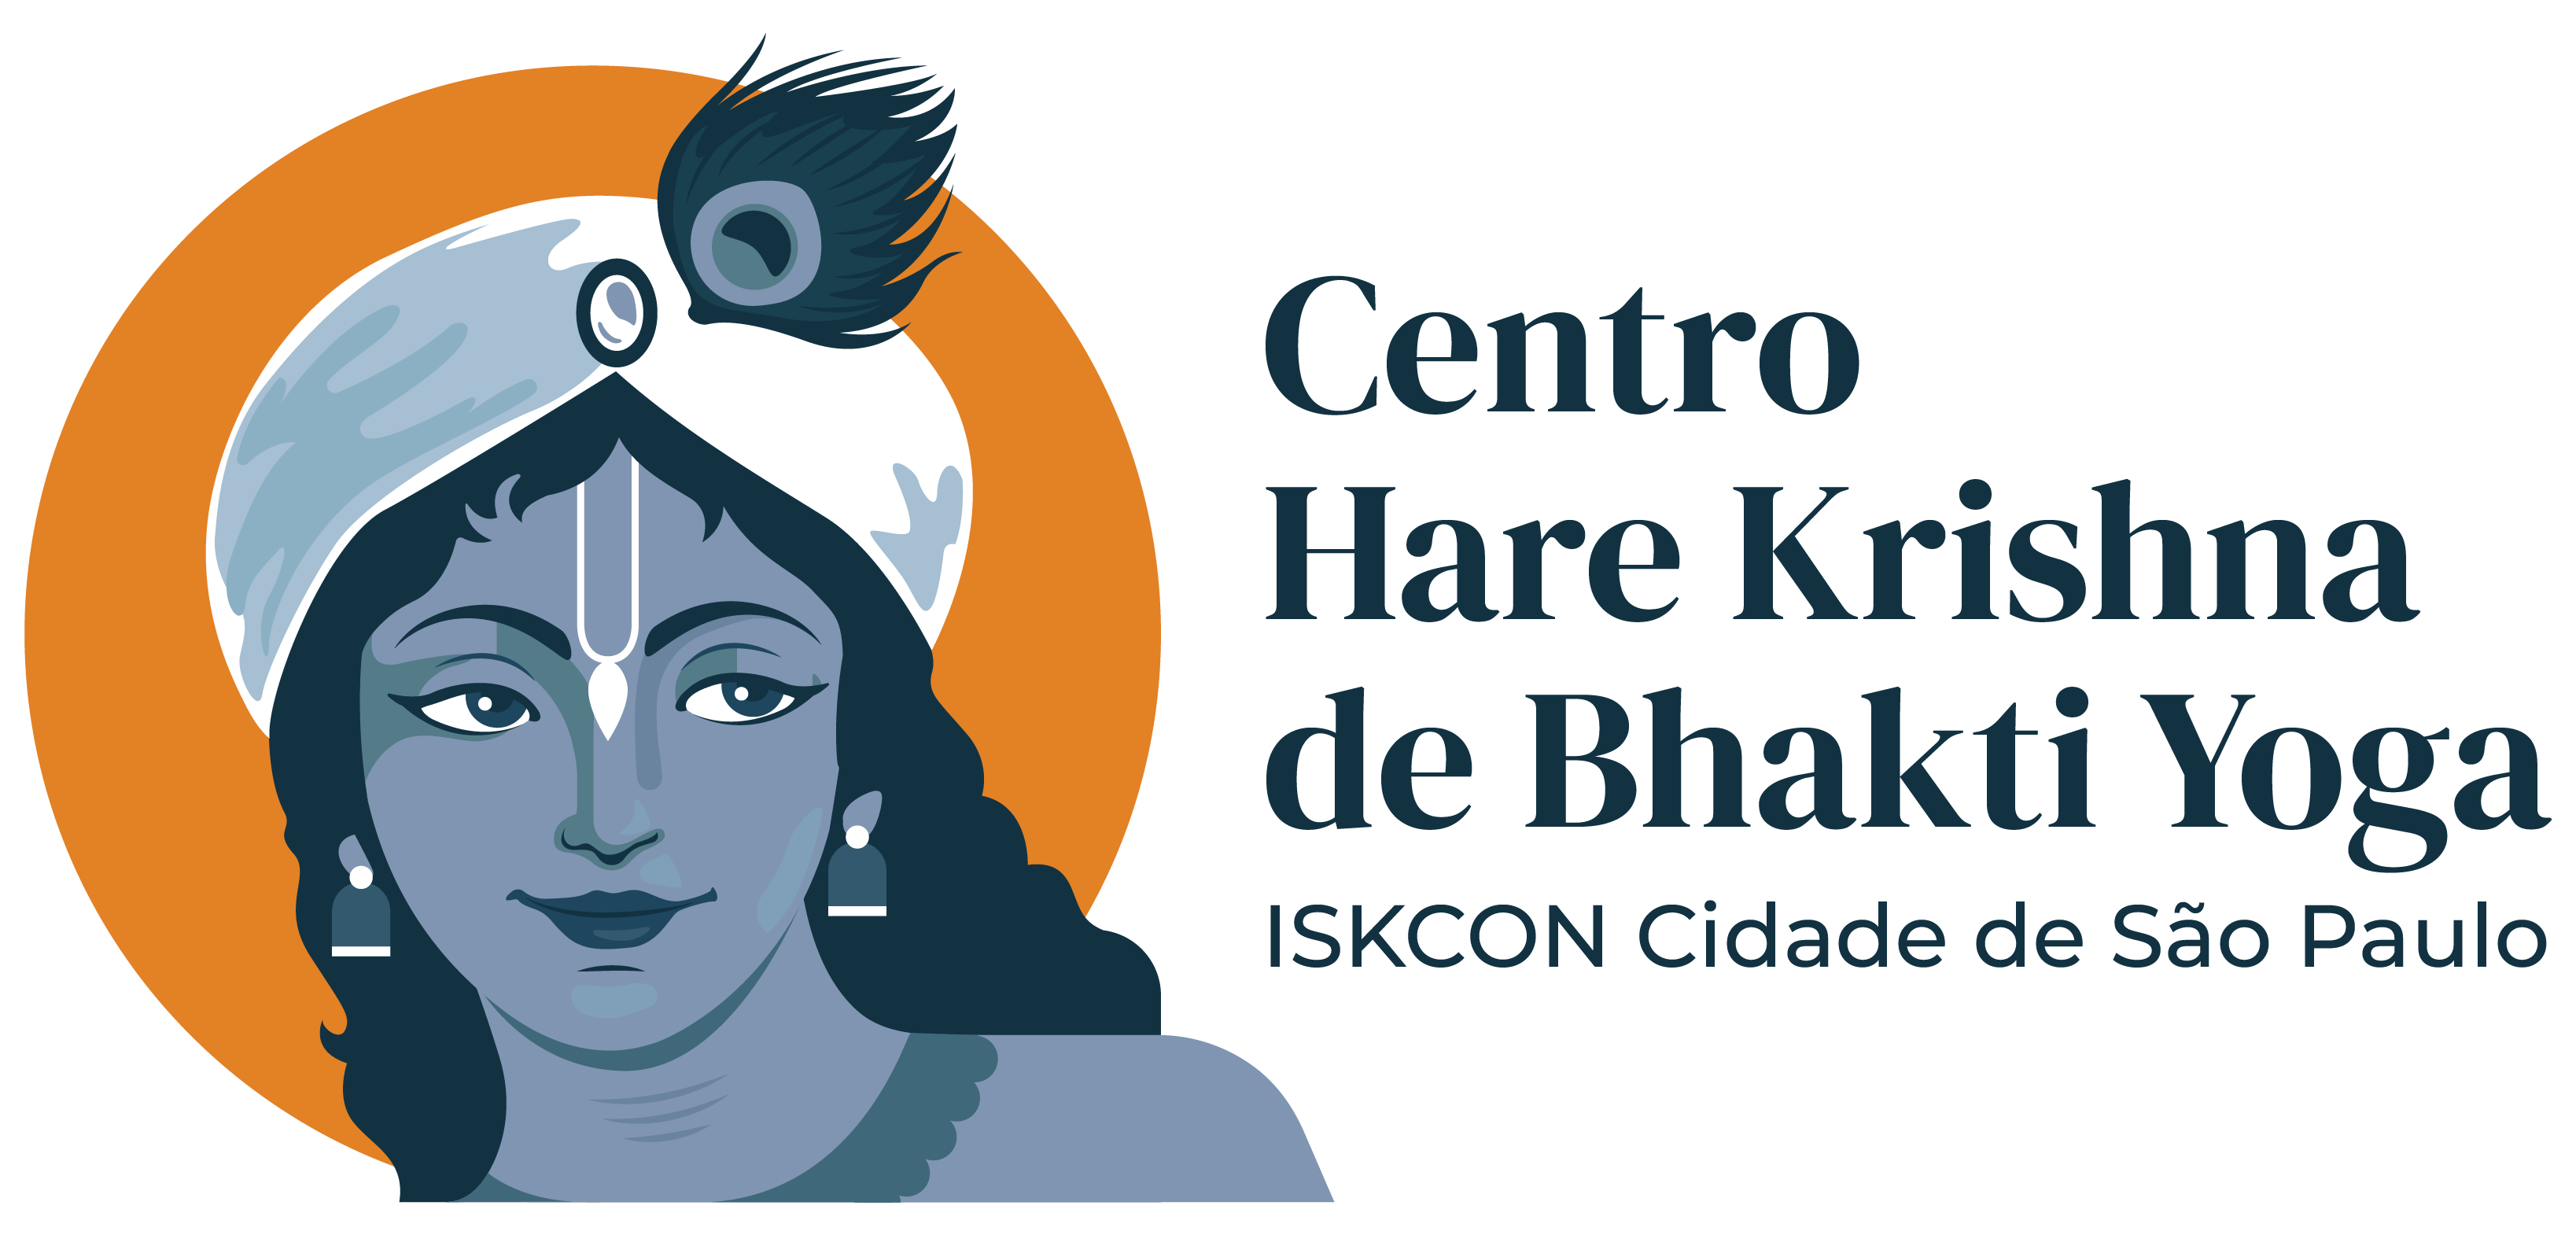 Centro Hare Krishna de Bhakti Yoga